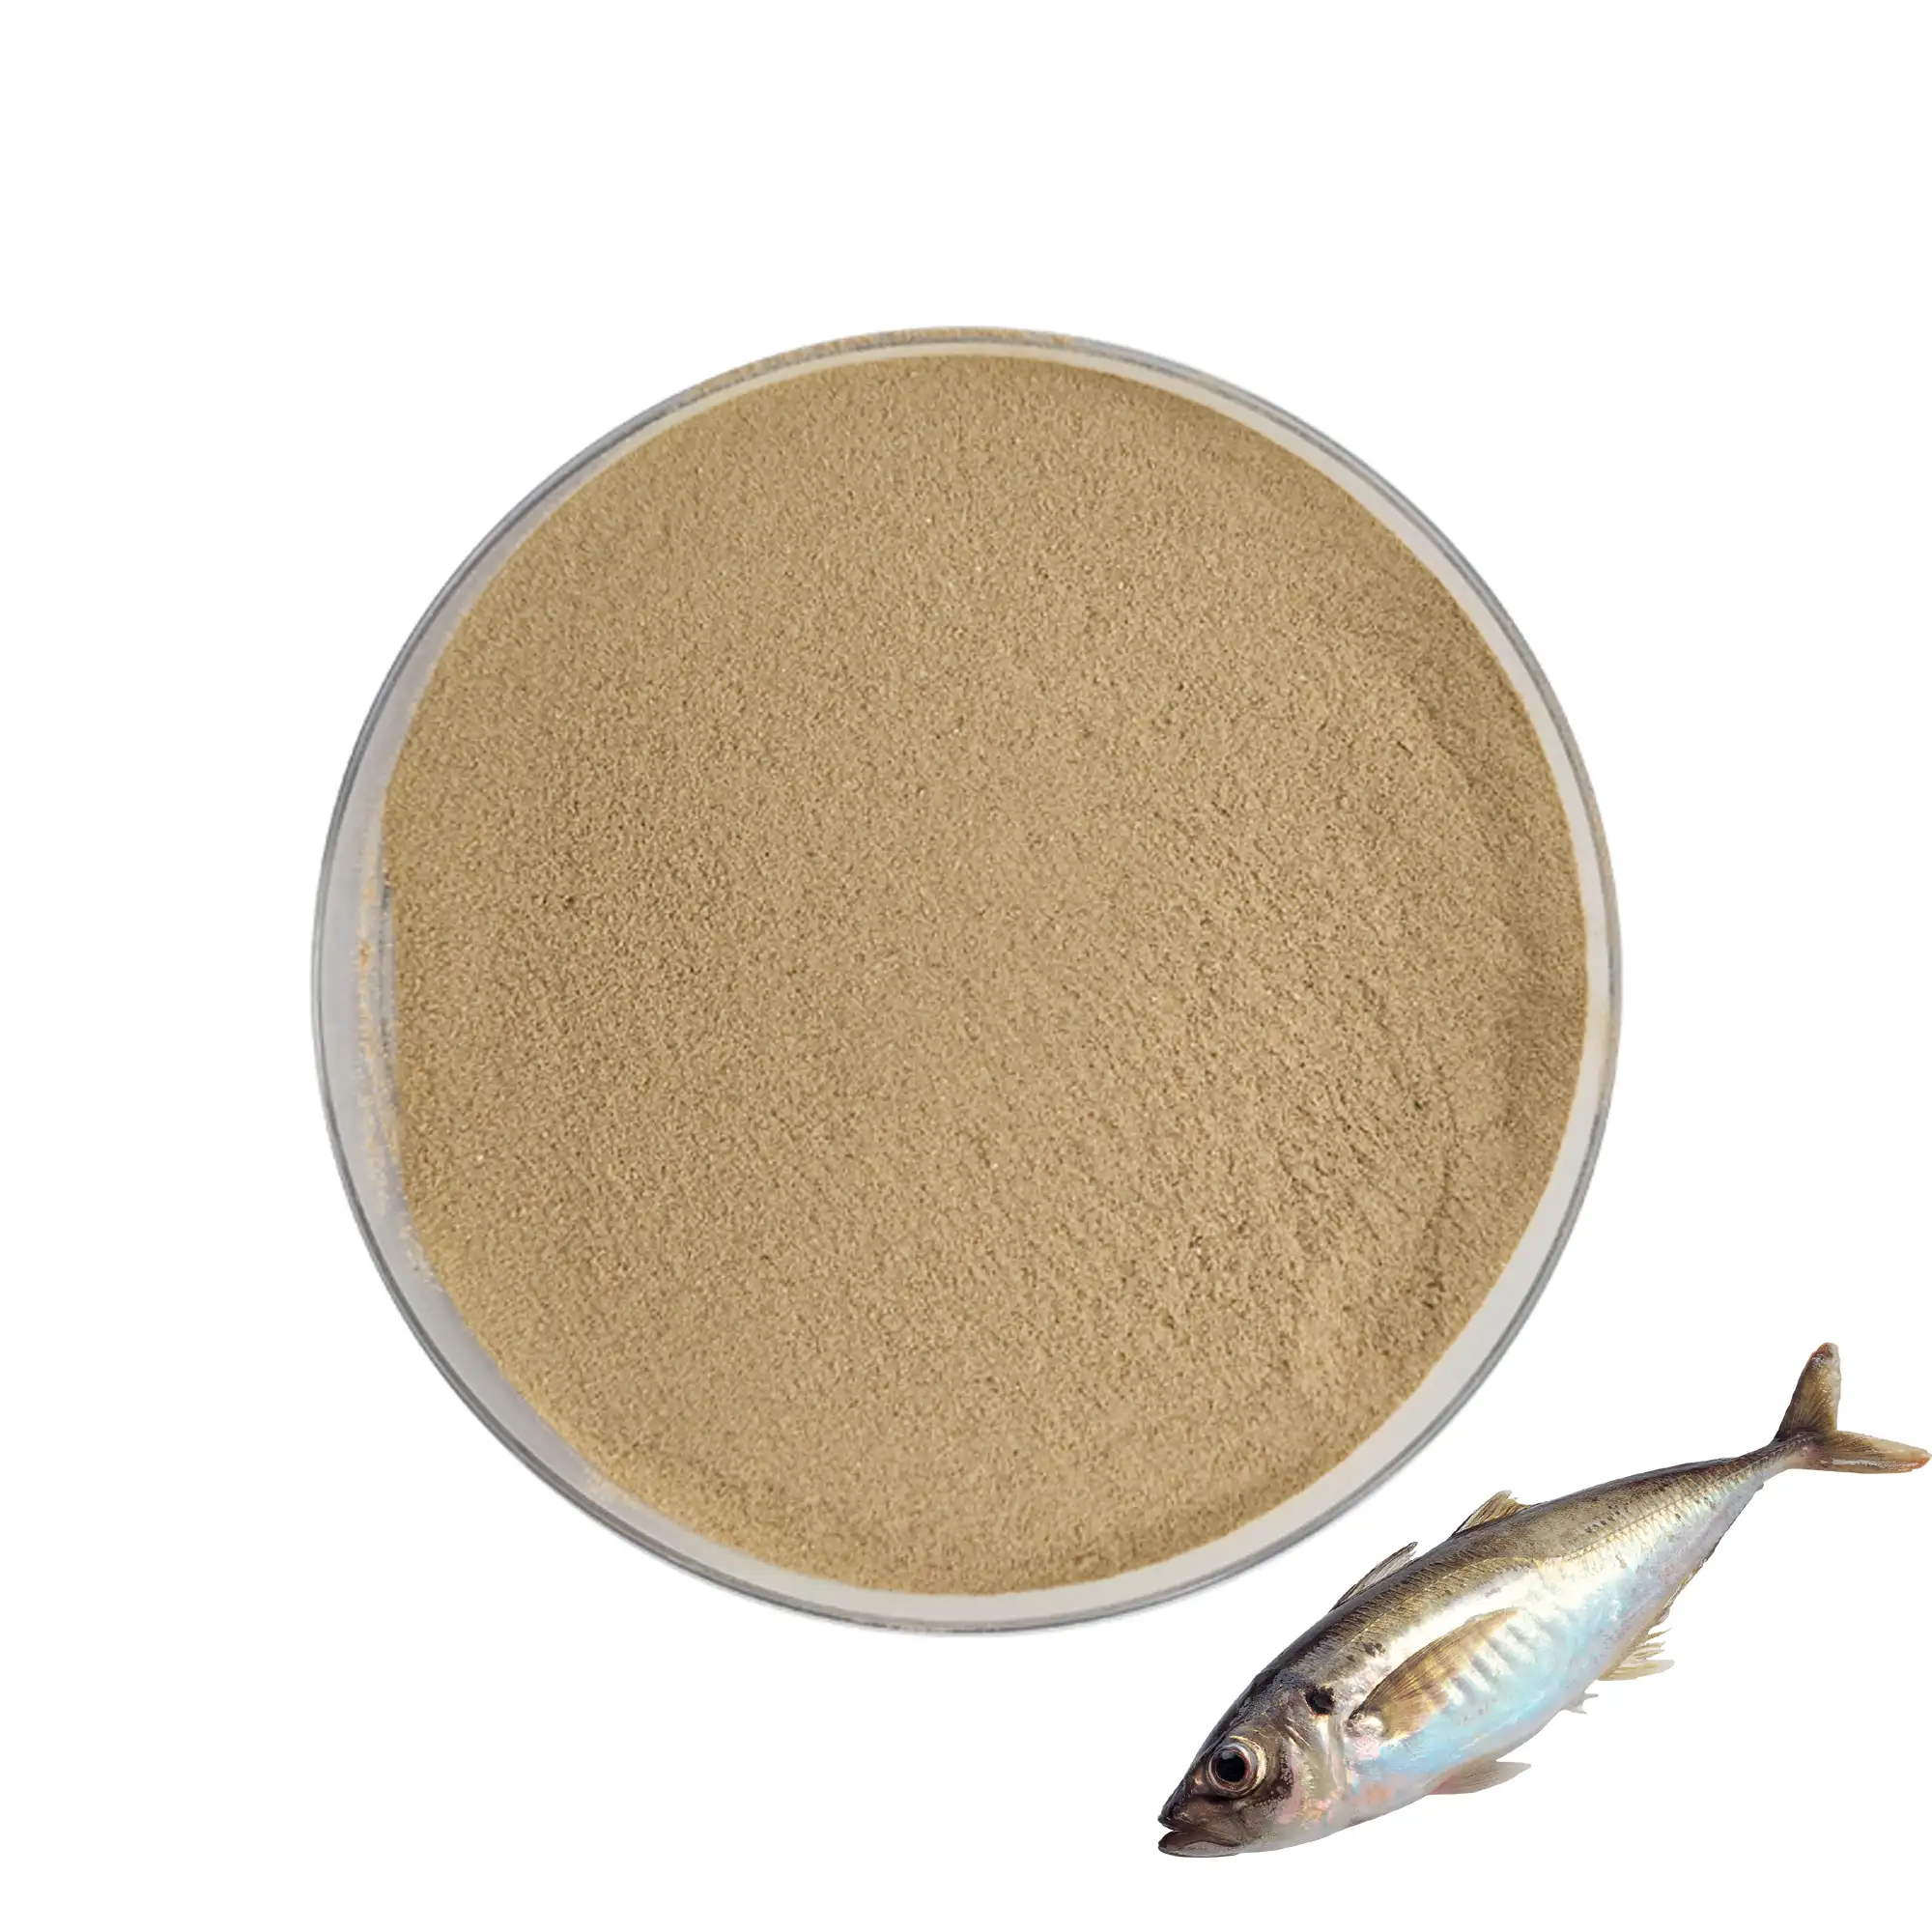 Aquakultur Probiotische Vor mischung % 10 - PROAQUA PMX 20 kg/Beutel